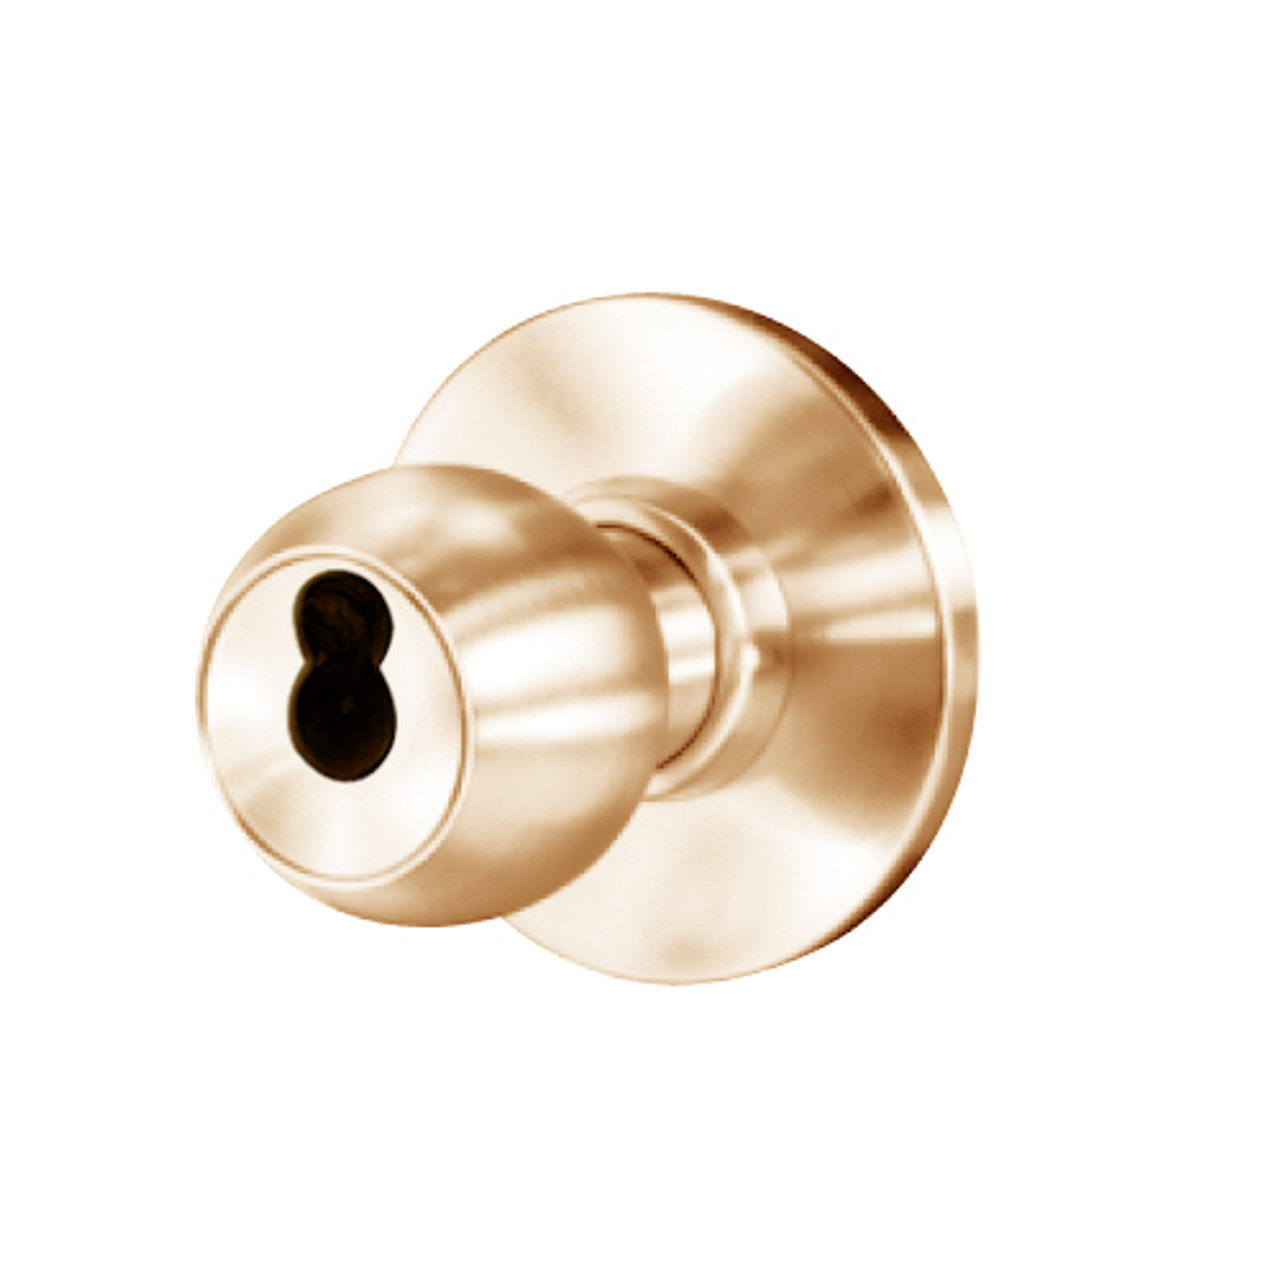 8K57YR4ASTK611 Best 8K Series Exit Heavy Duty Cylindrical Knob Locks with Round Style in Bright Bronze